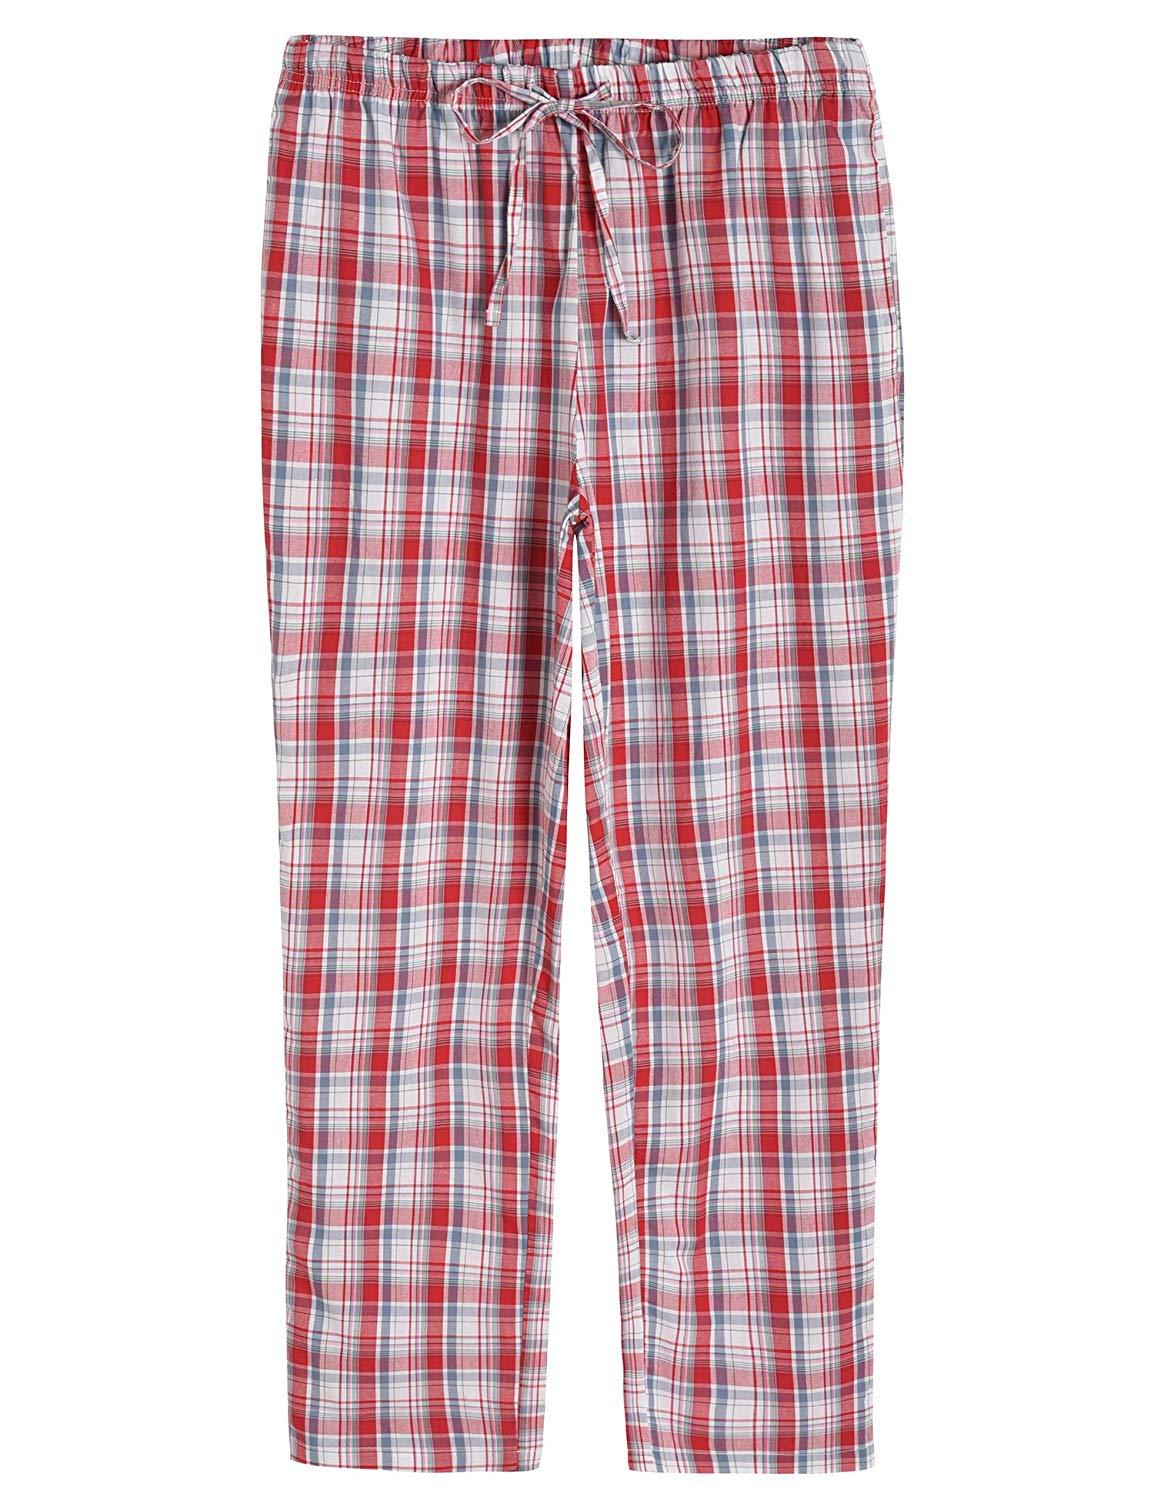 Women's Plaid Pajamas Pants Cotton Sleepwear with Pockets